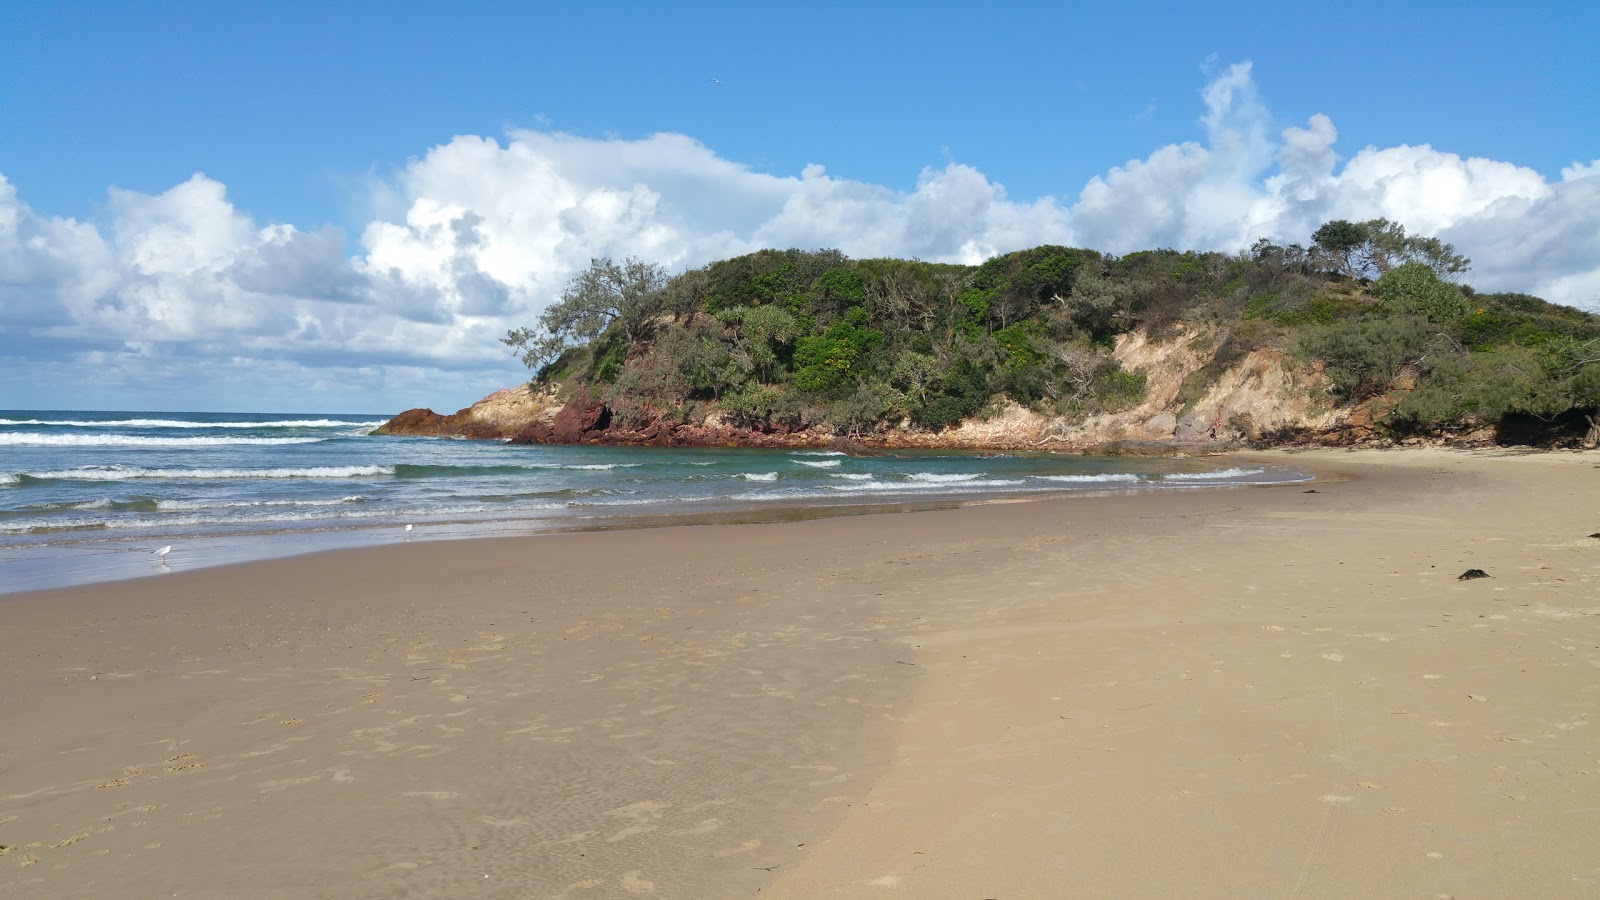 Foto di Little Beach ubicato in zona naturale